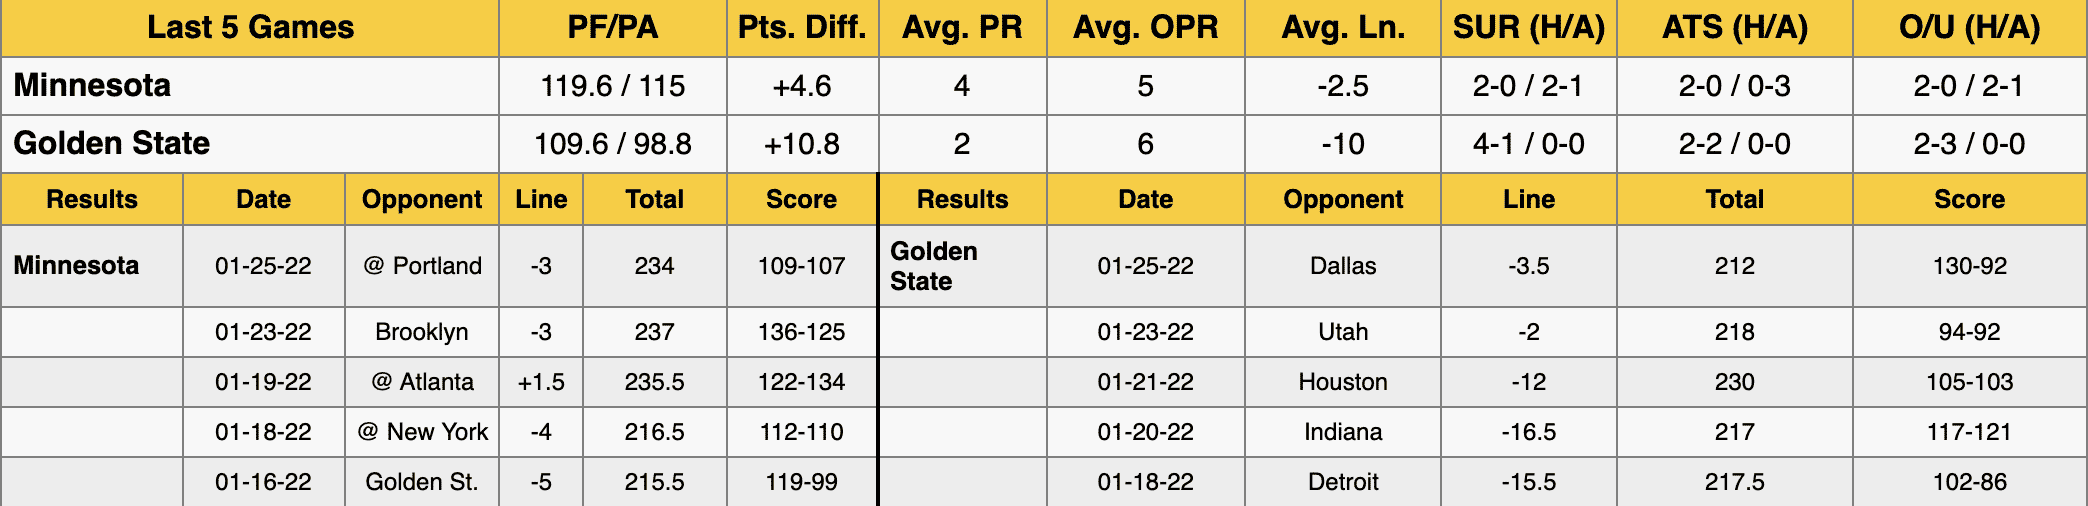 Golden State Warriors vs Minnesota Timberwolves Stats